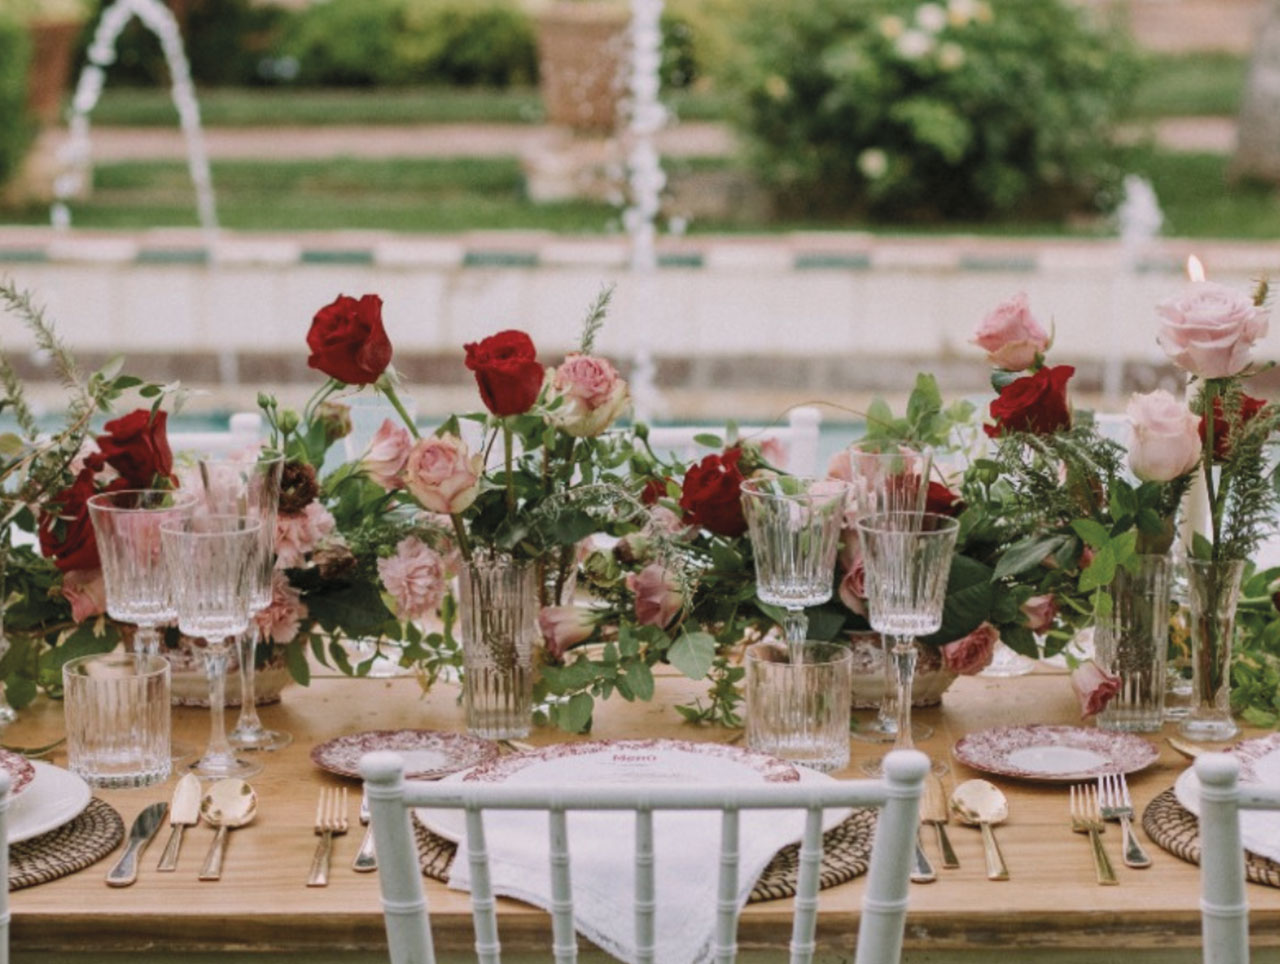 decoración de mesa imperial boda co rosas rojas 